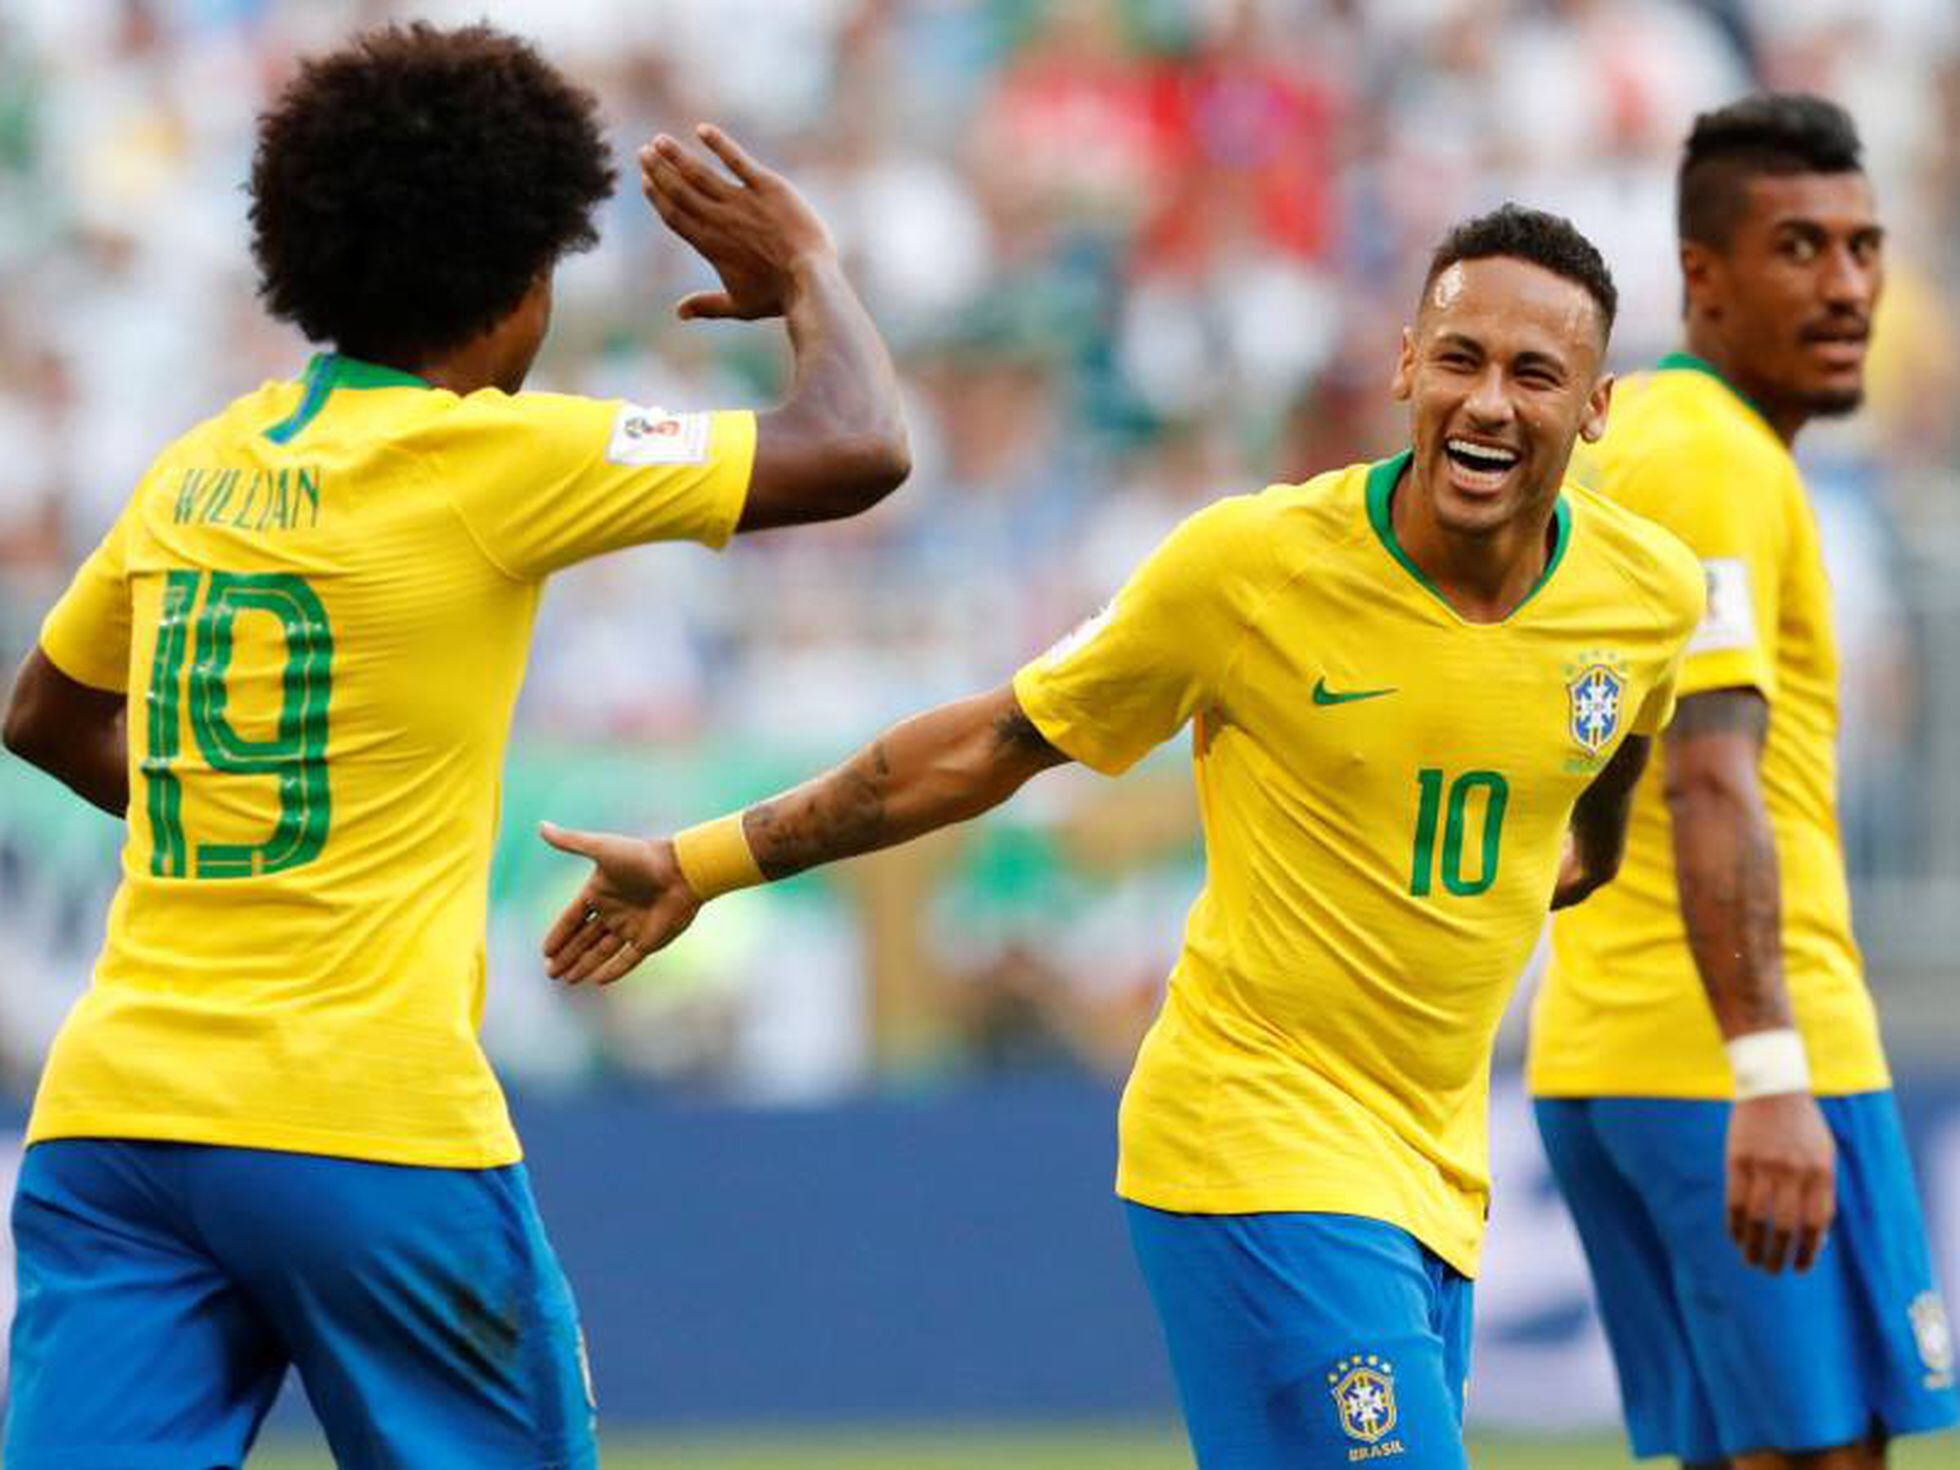 Copa do Mundo 2018: Brasil é favorito? - Esportes Completos